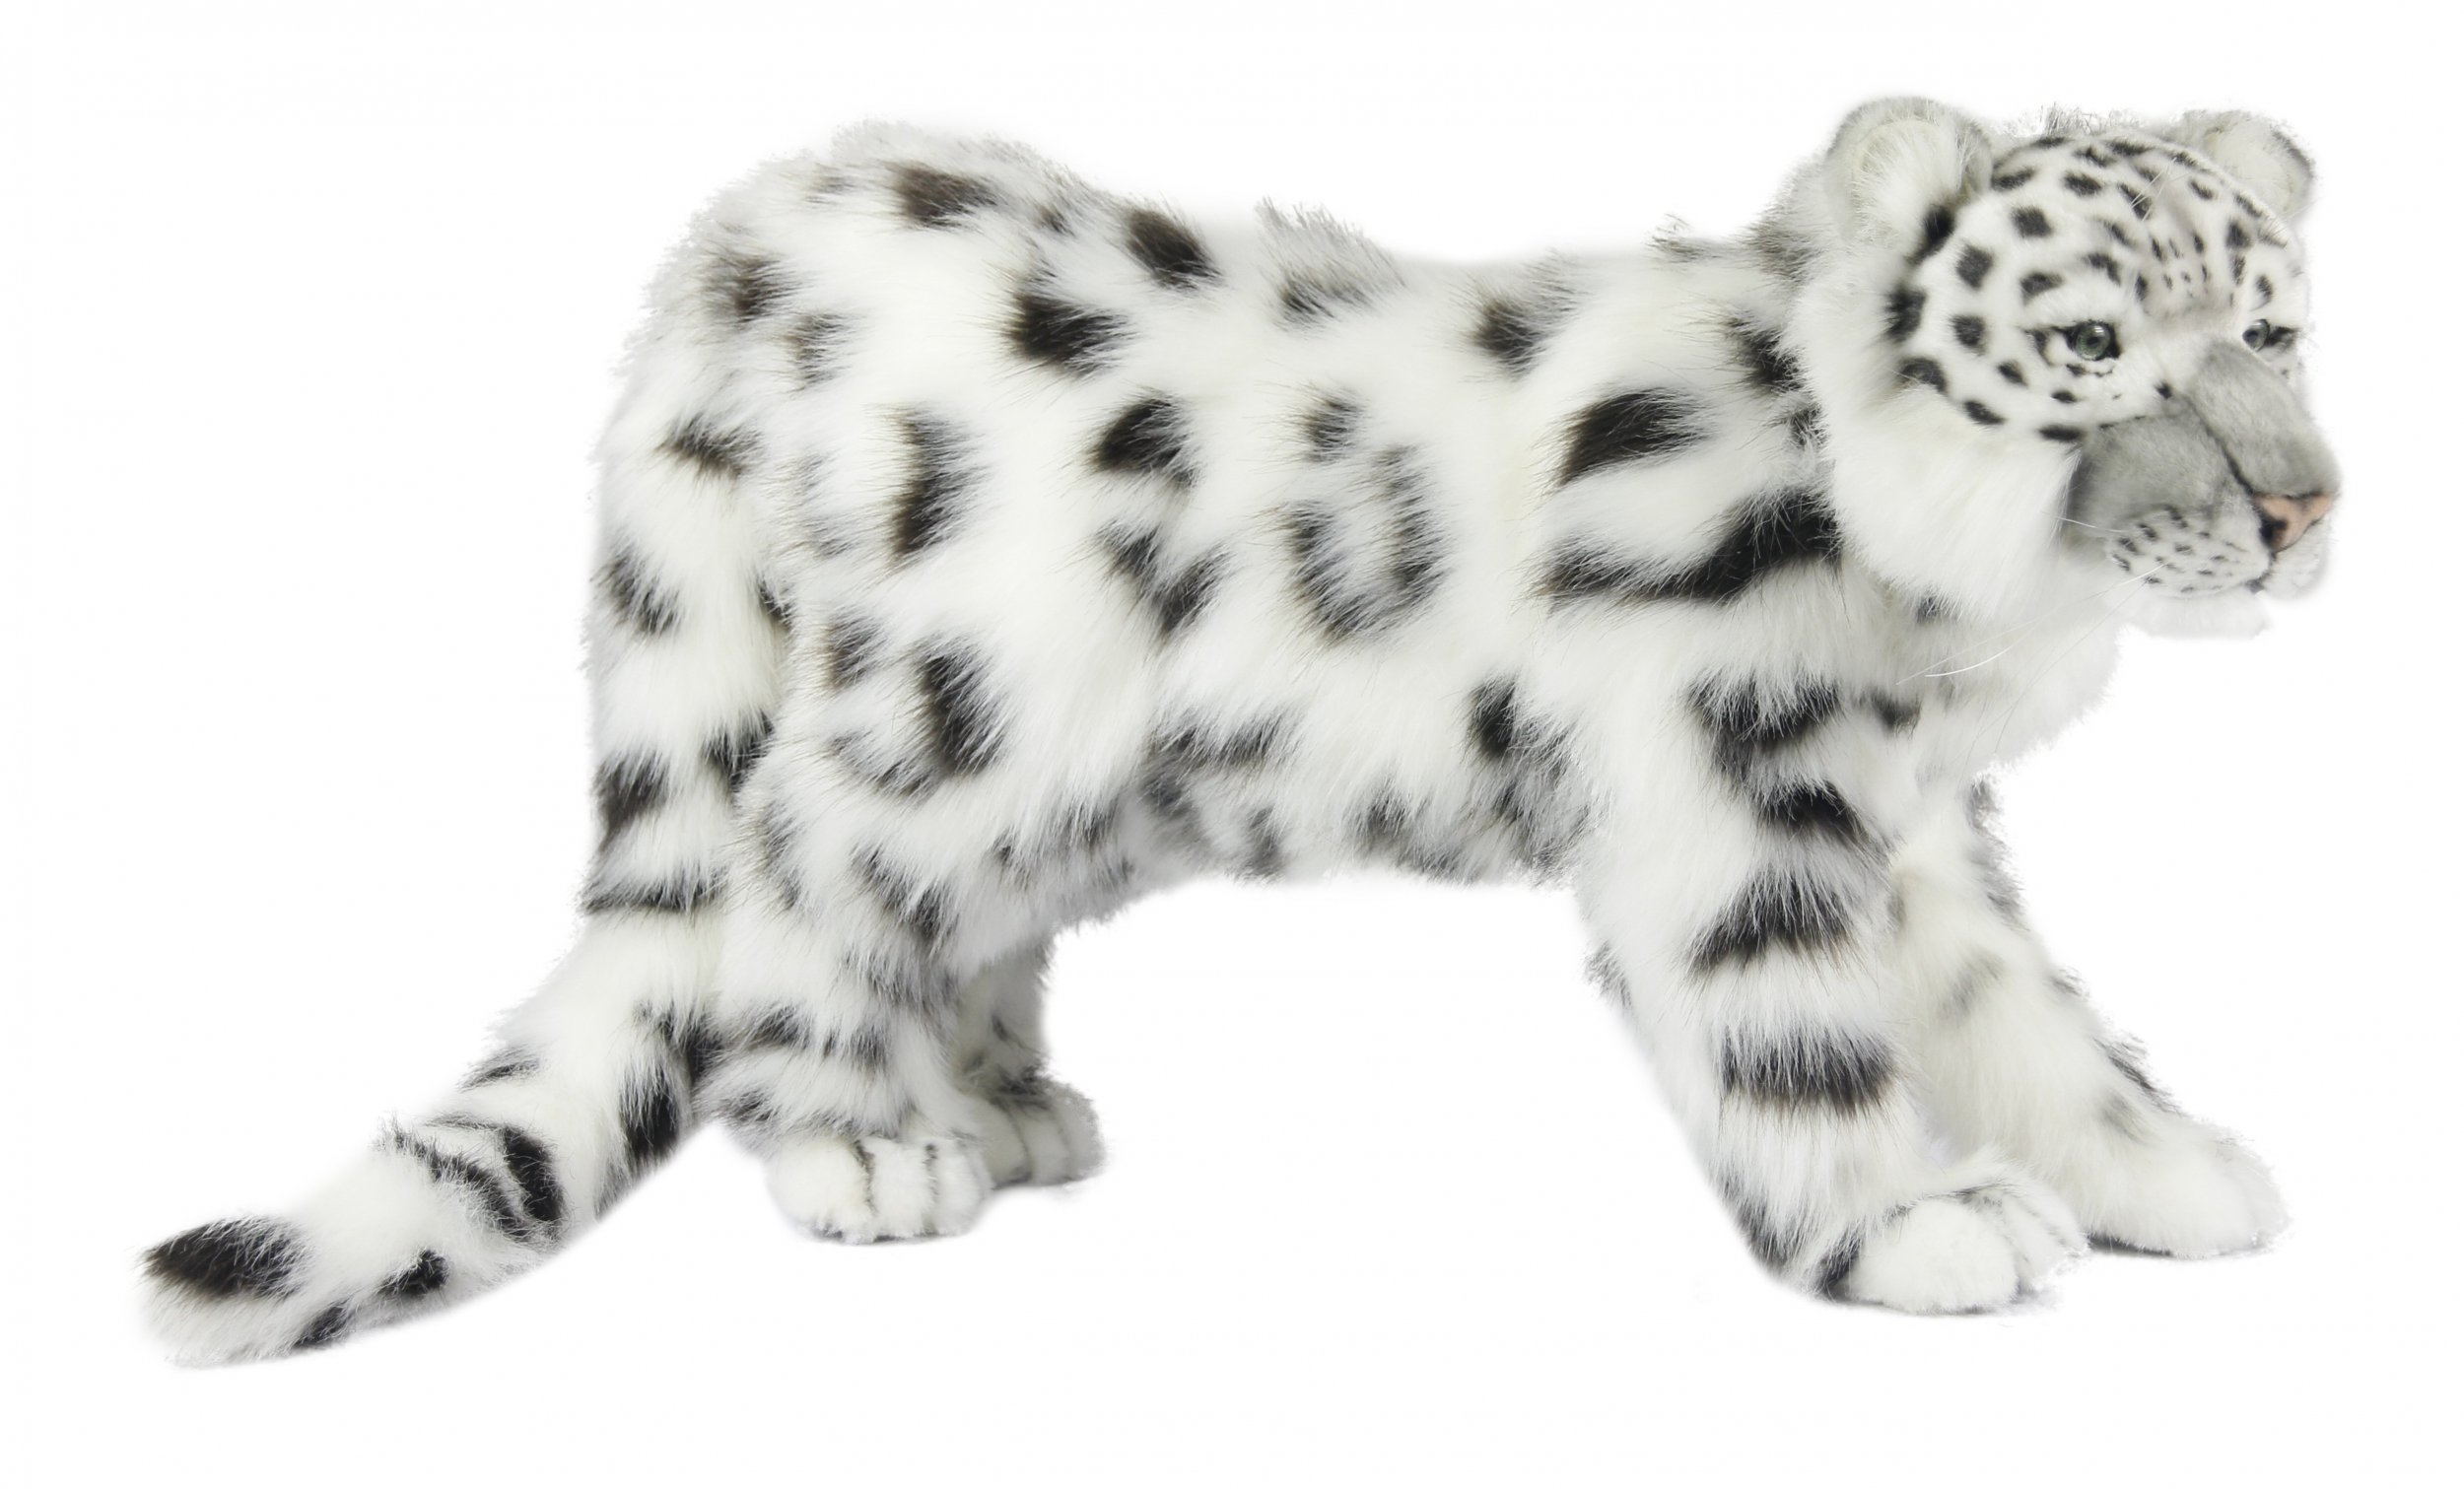 snow leopard teddy